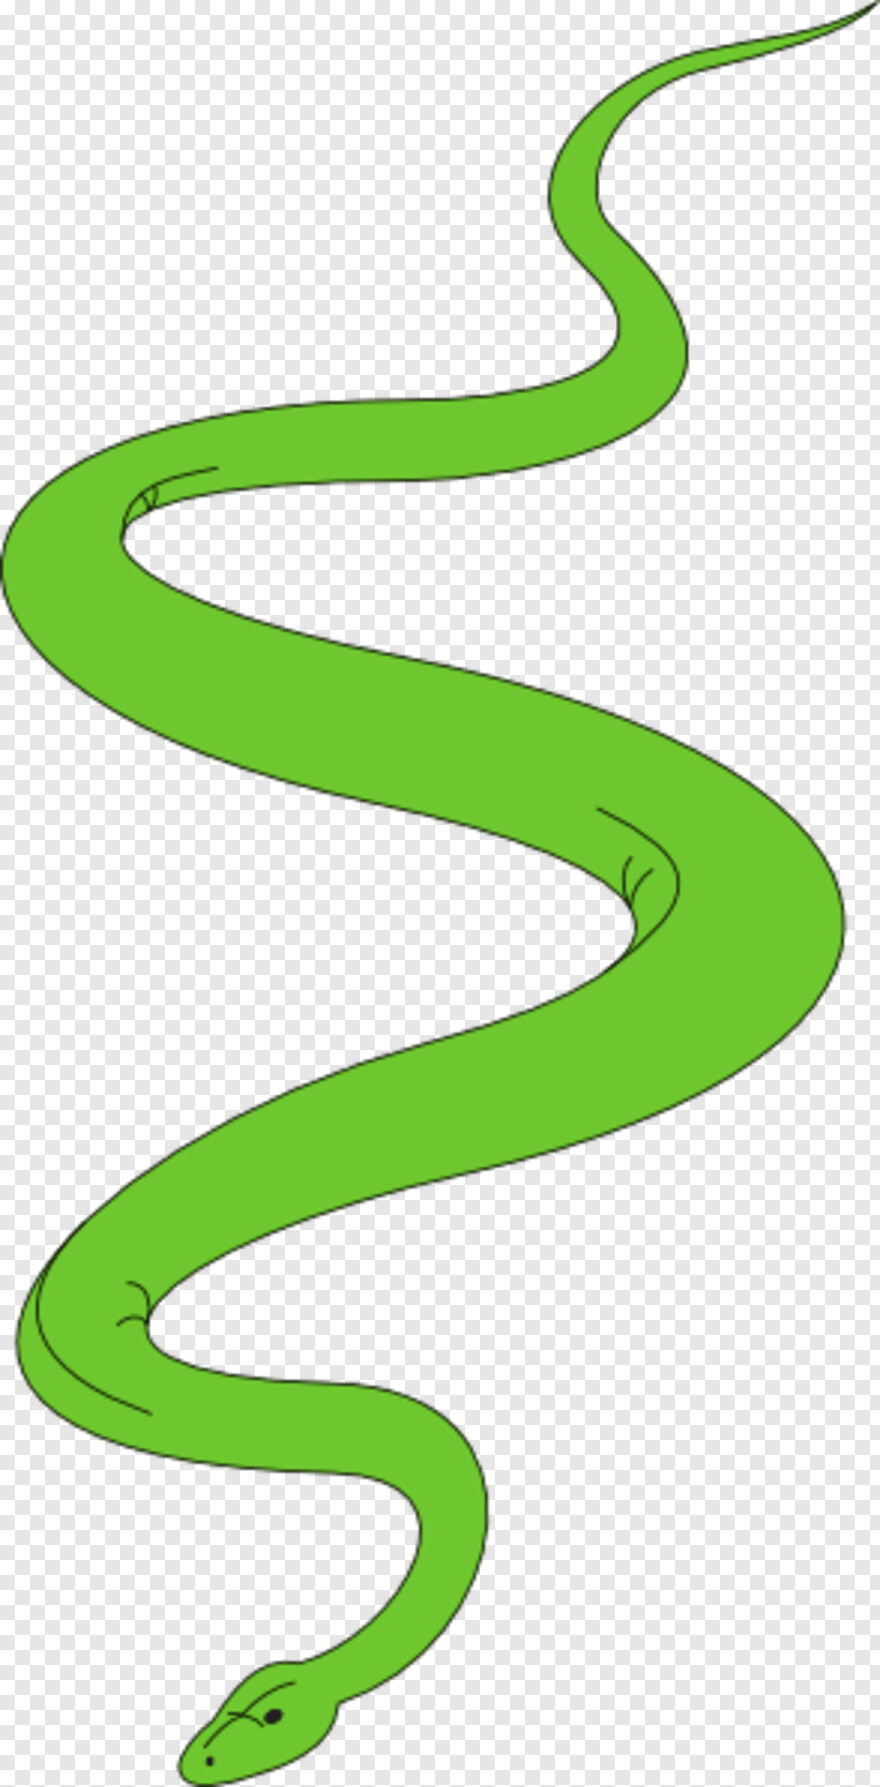 gucci-snake # 511997